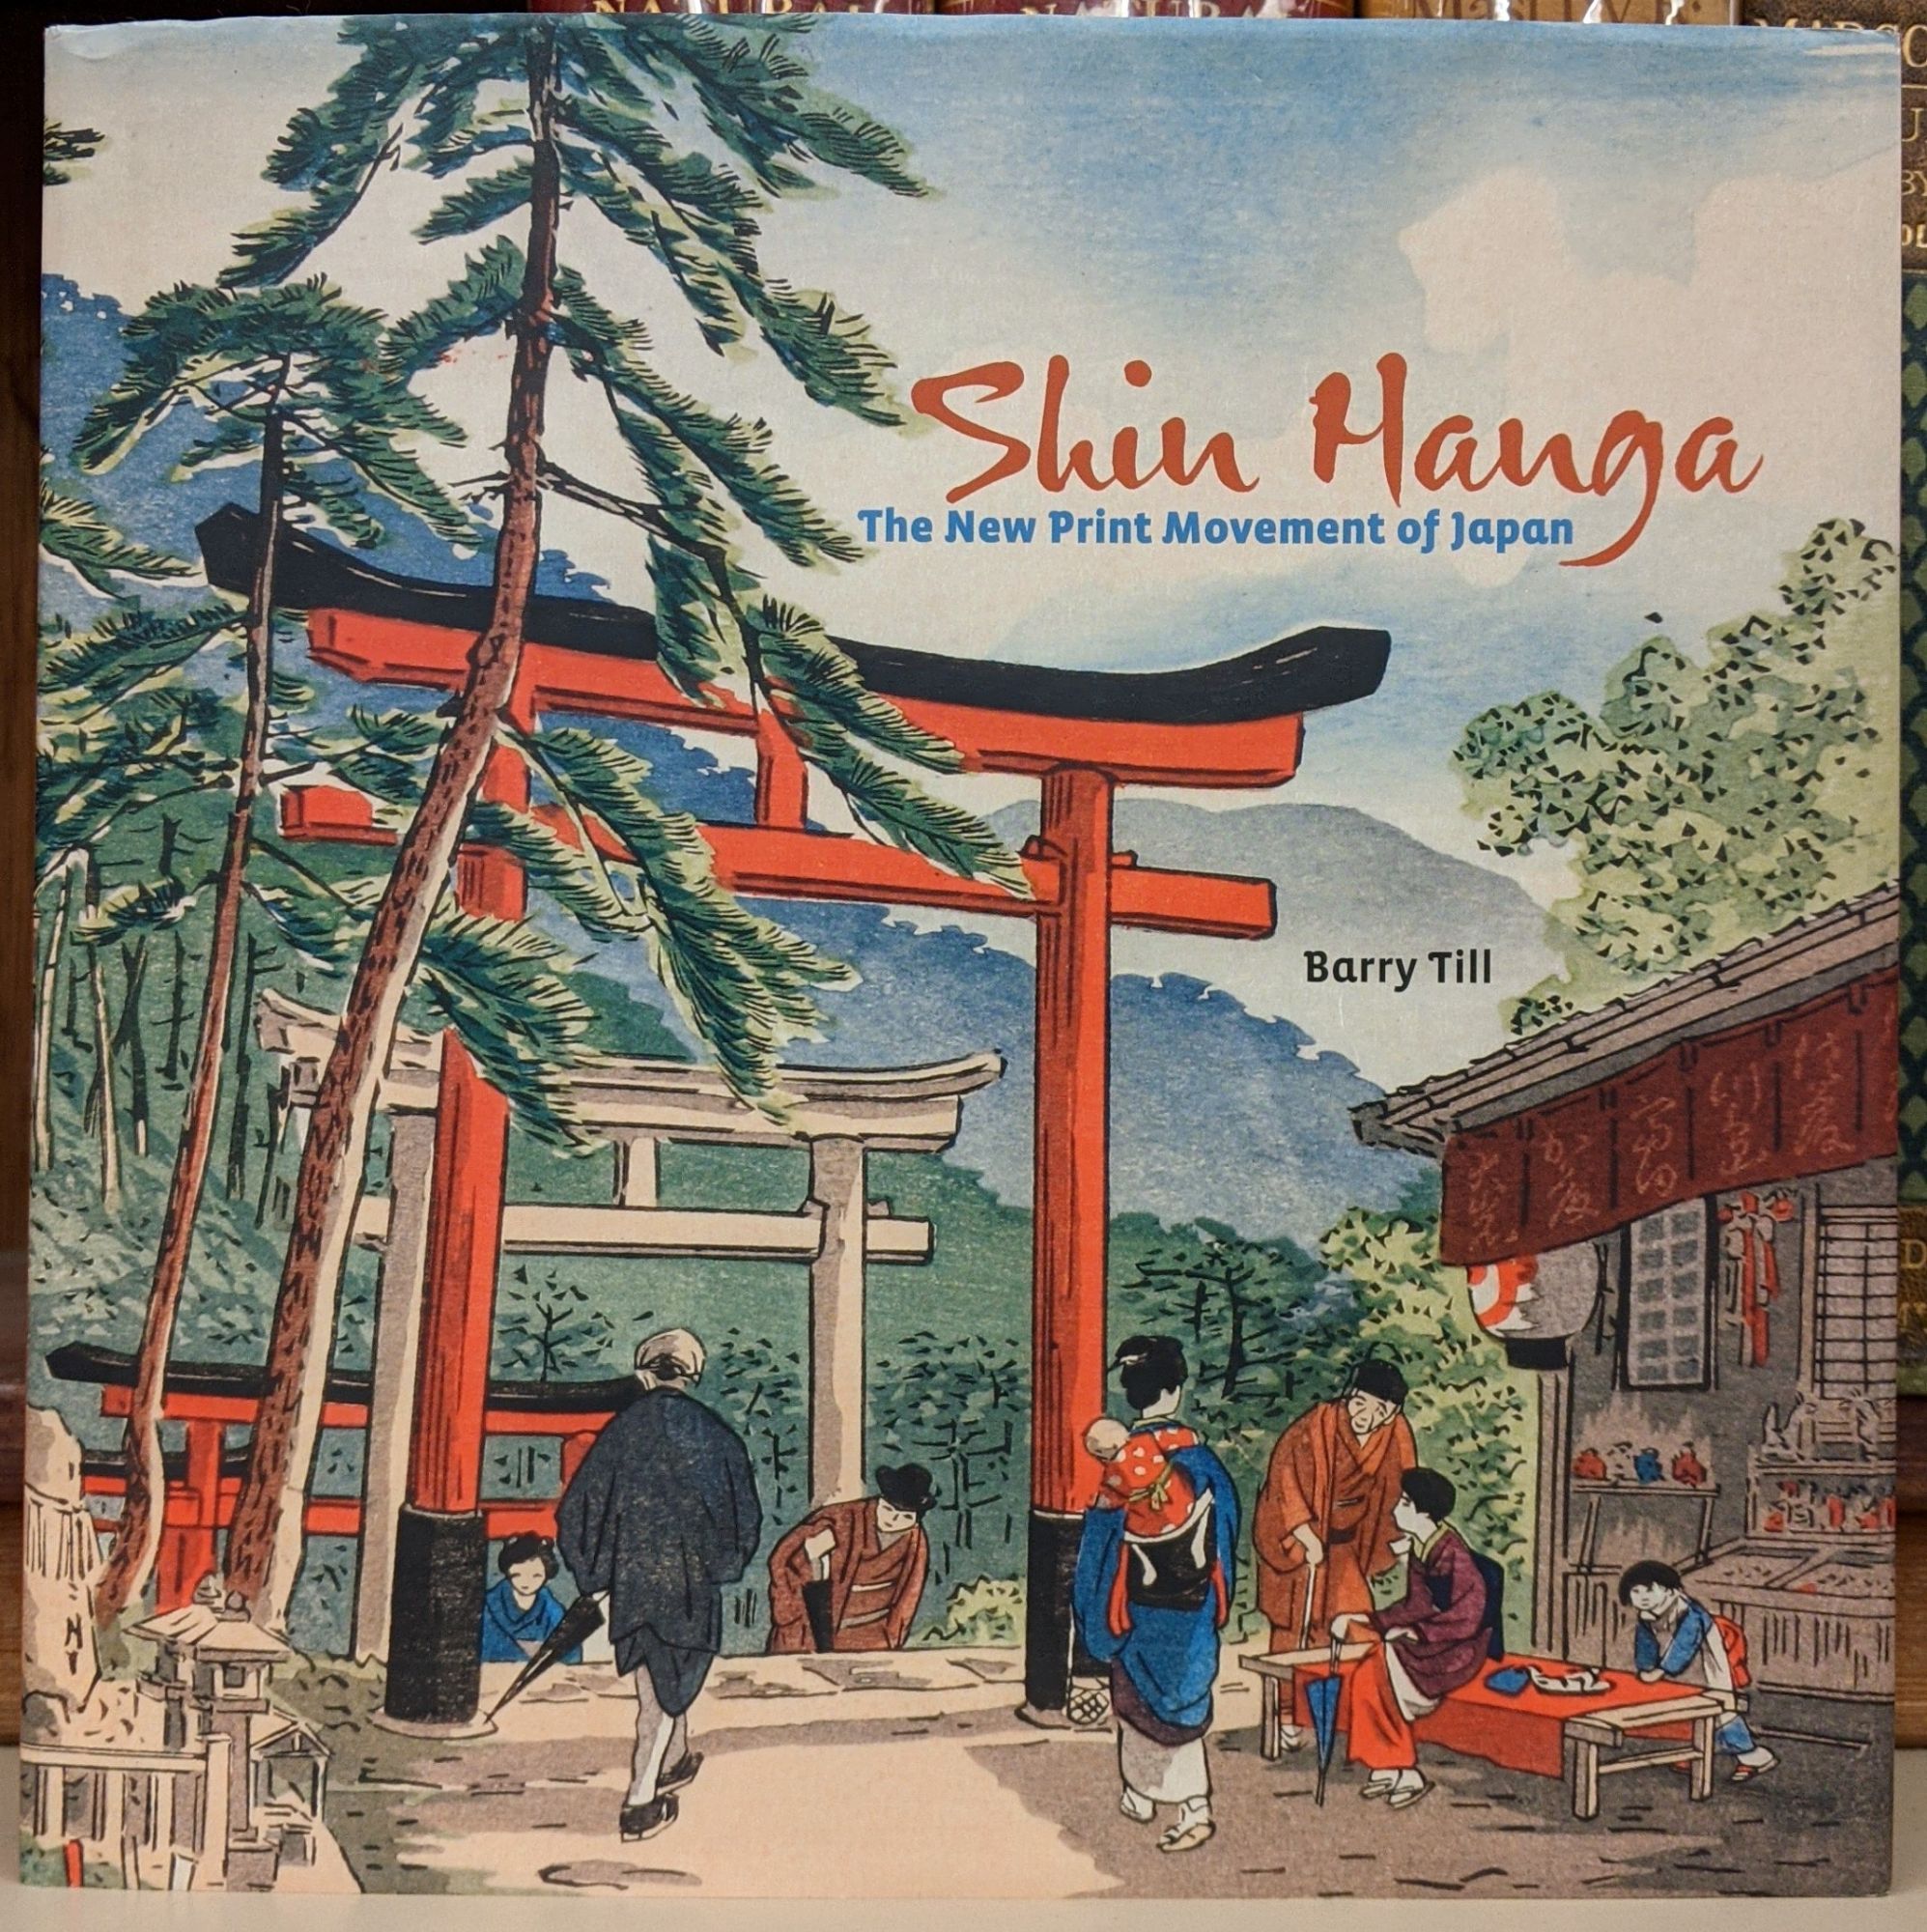 Shin Hanga: The New Print Movement of Japan by Barry Till on Moe's Books